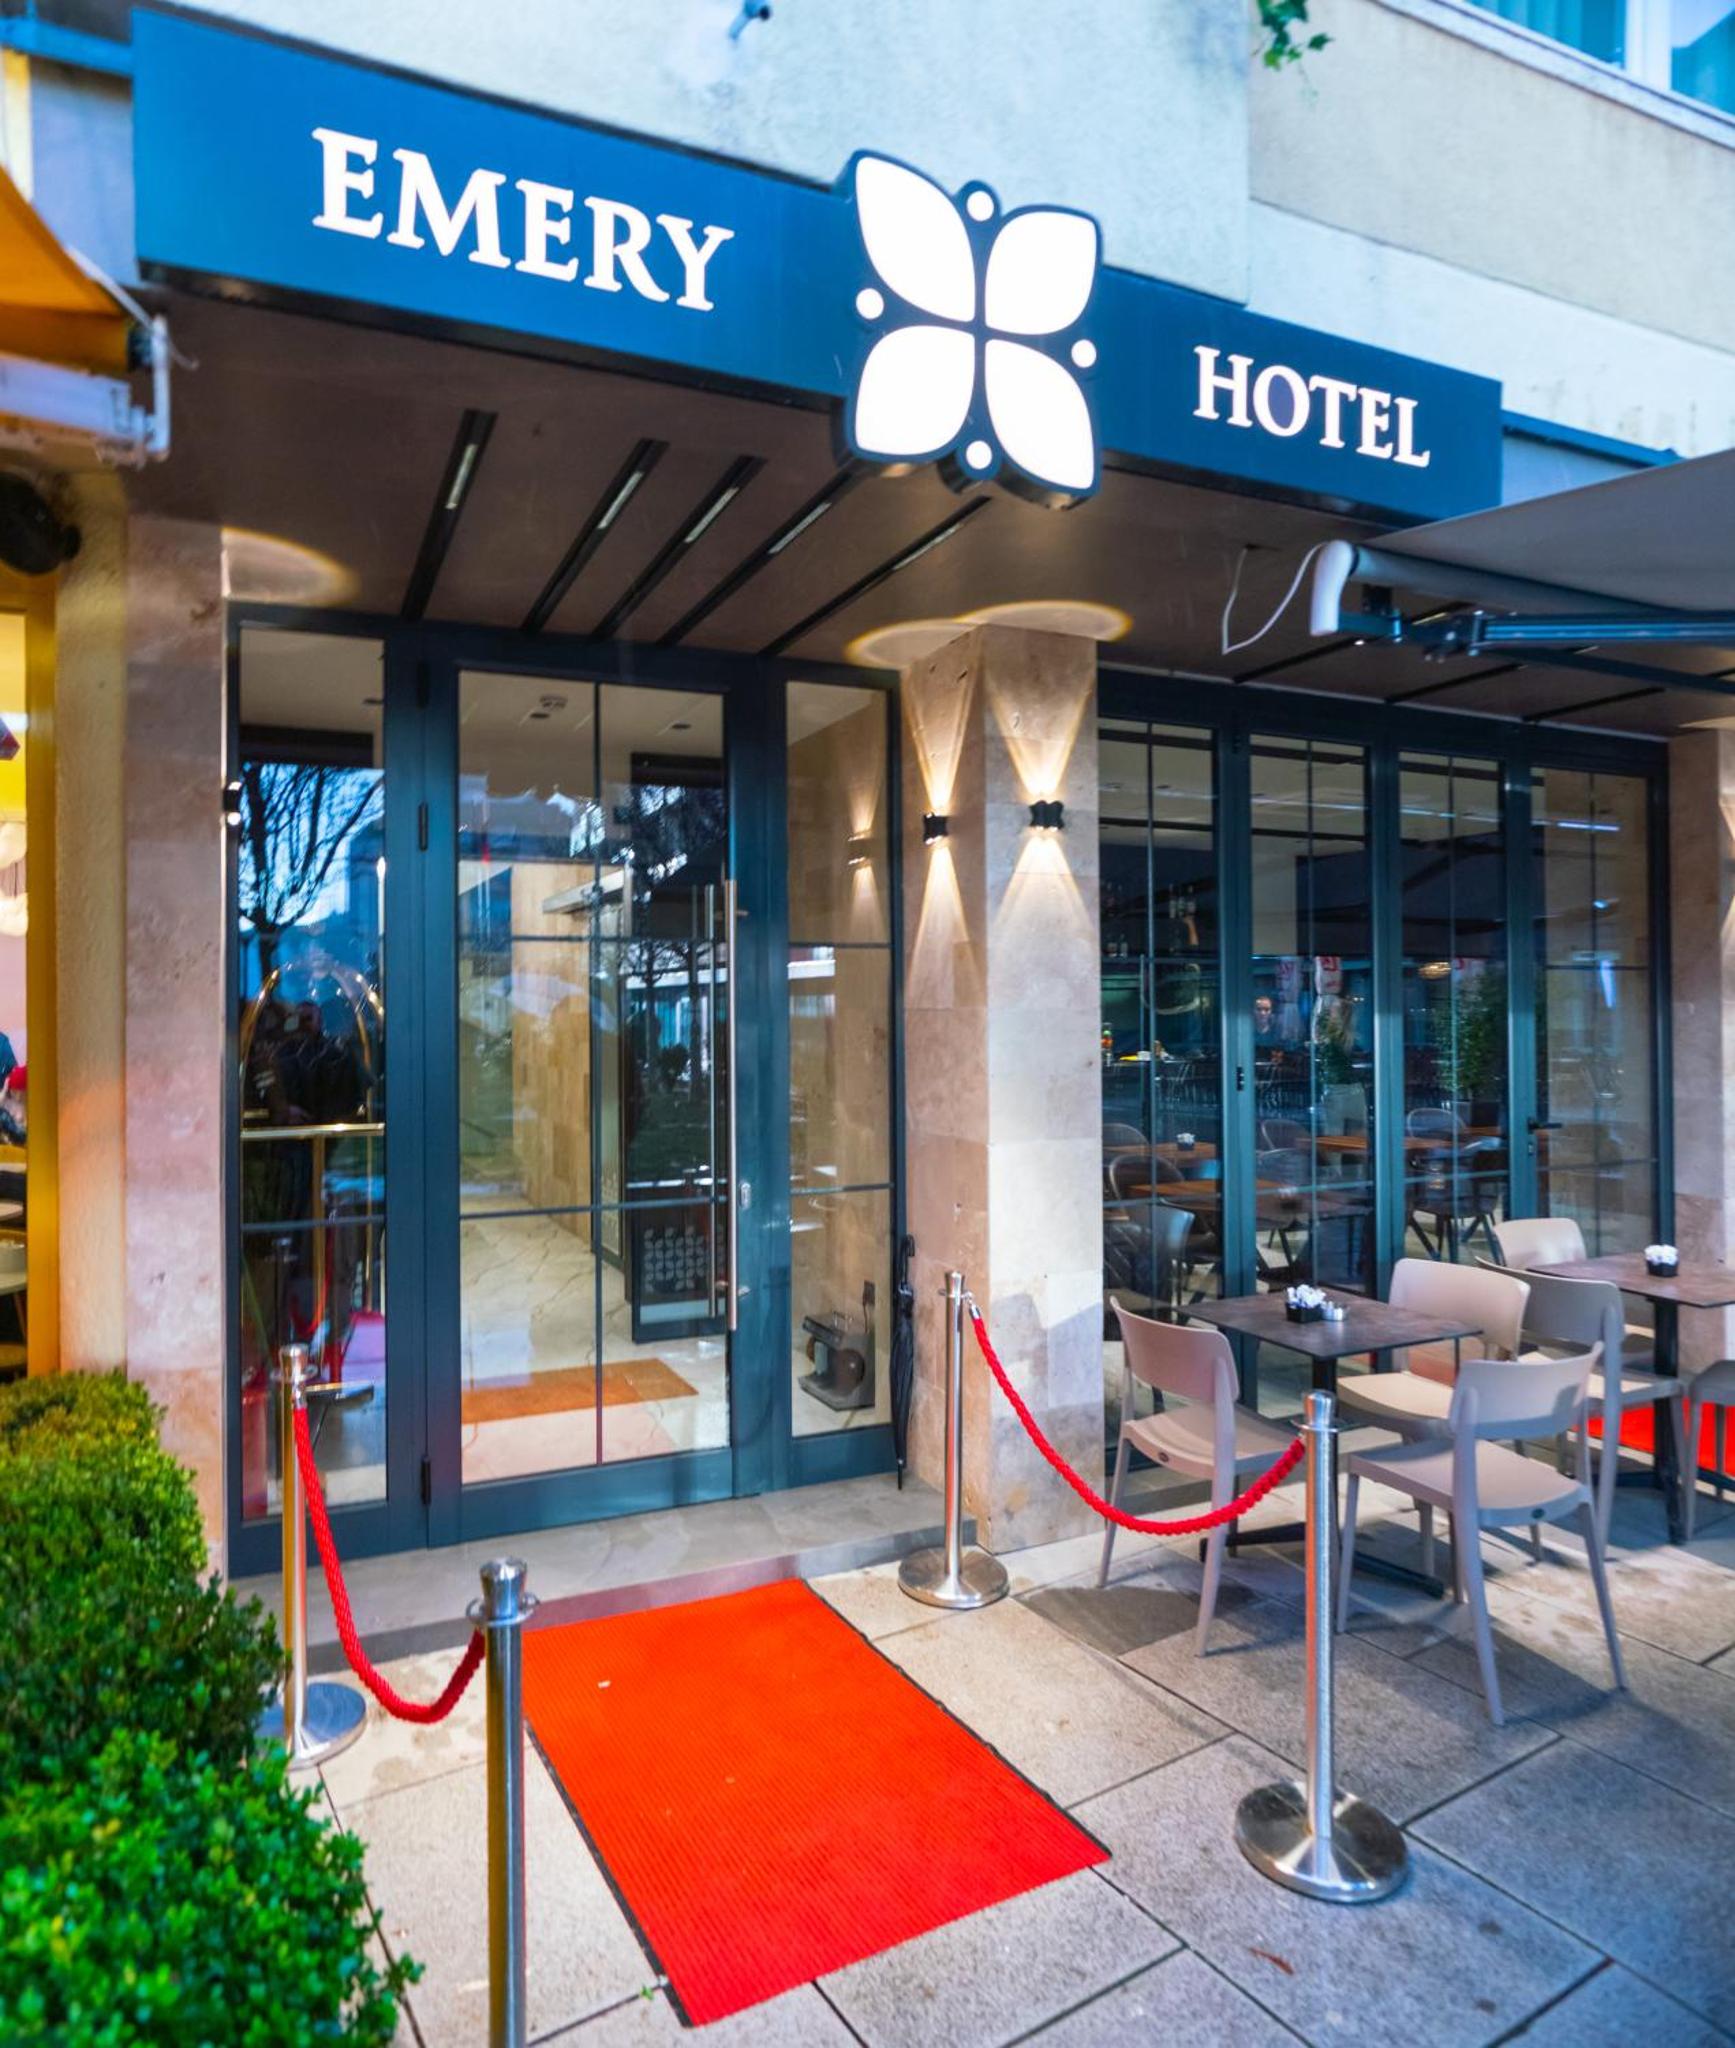 Emery Hotel